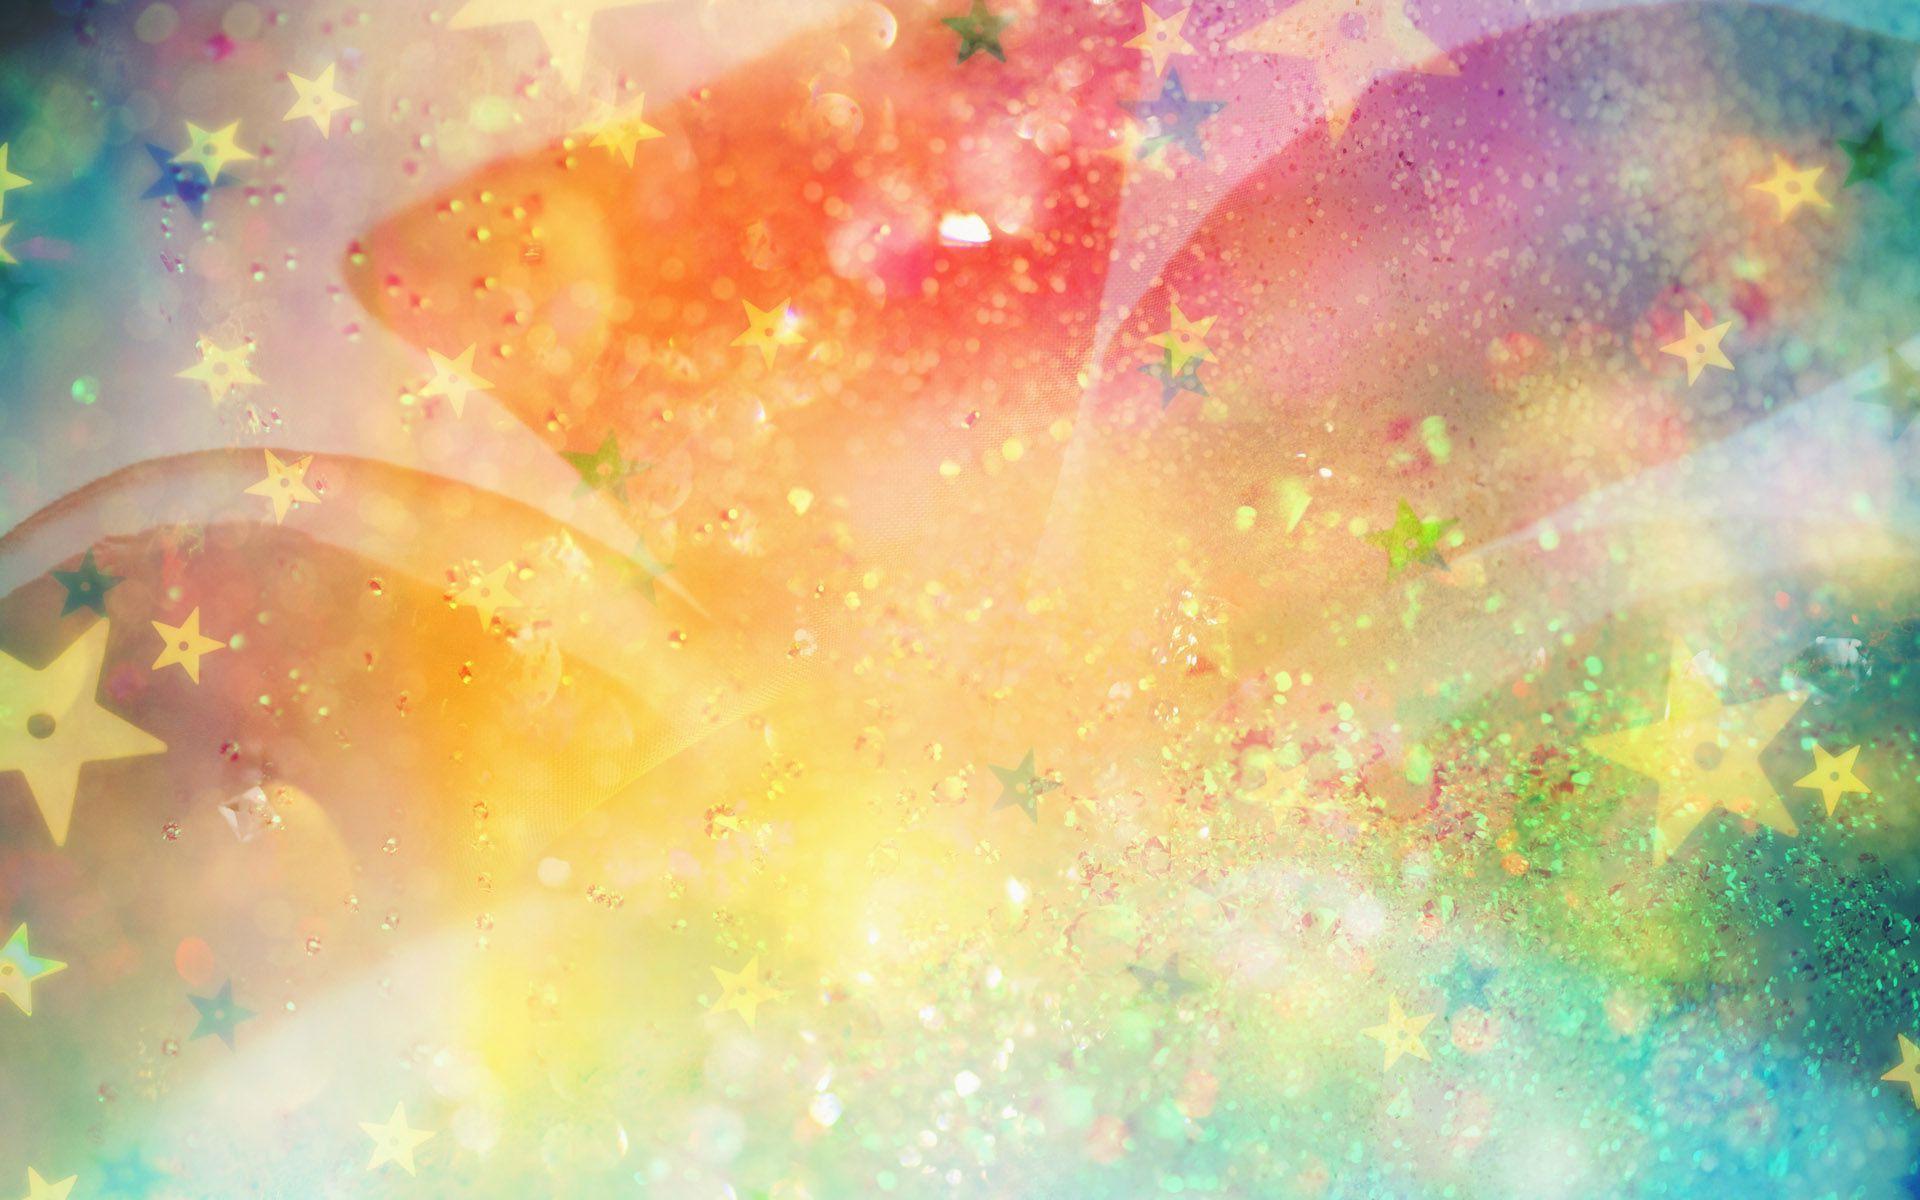 Sparkling stars Wallpaper Image. HD Wallpaper Image